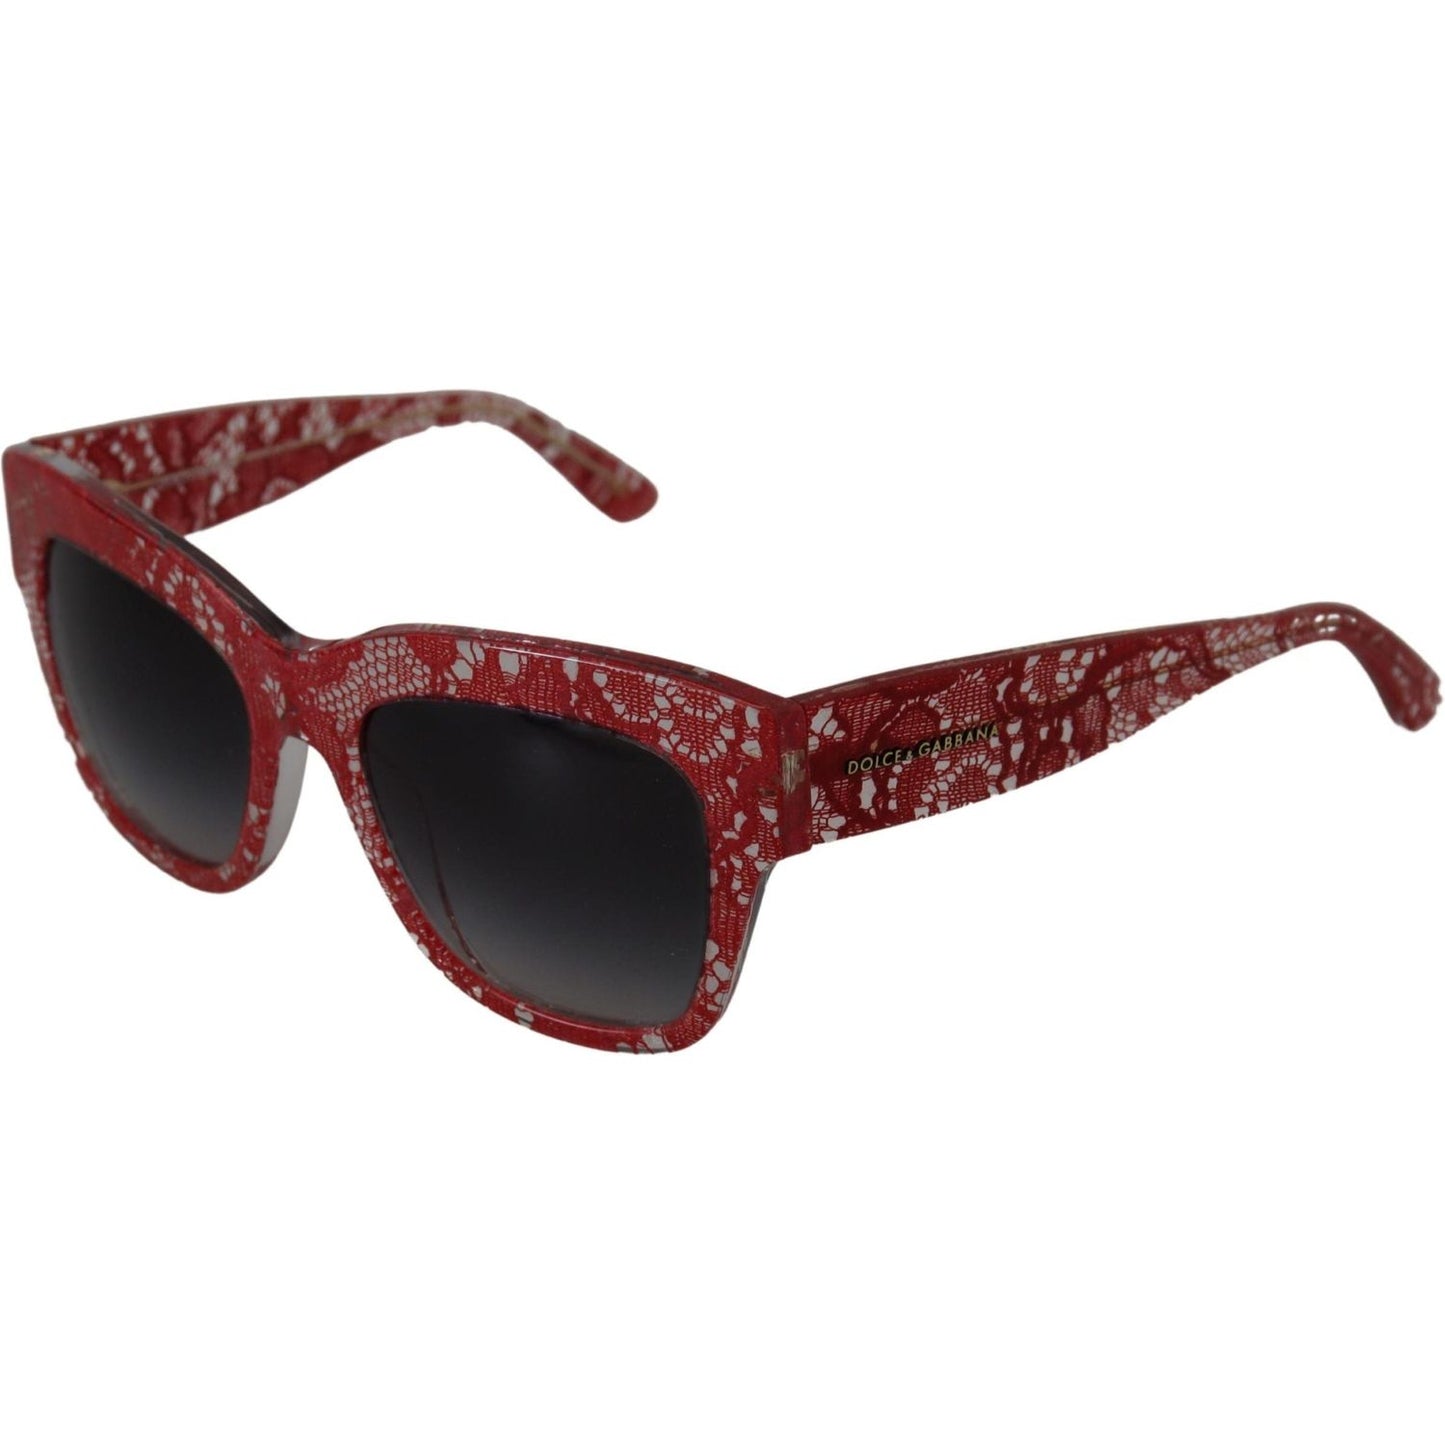 Dolce & Gabbana | Elegant Lace-Infused Red Sunglasses| McRichard Designer Brands   